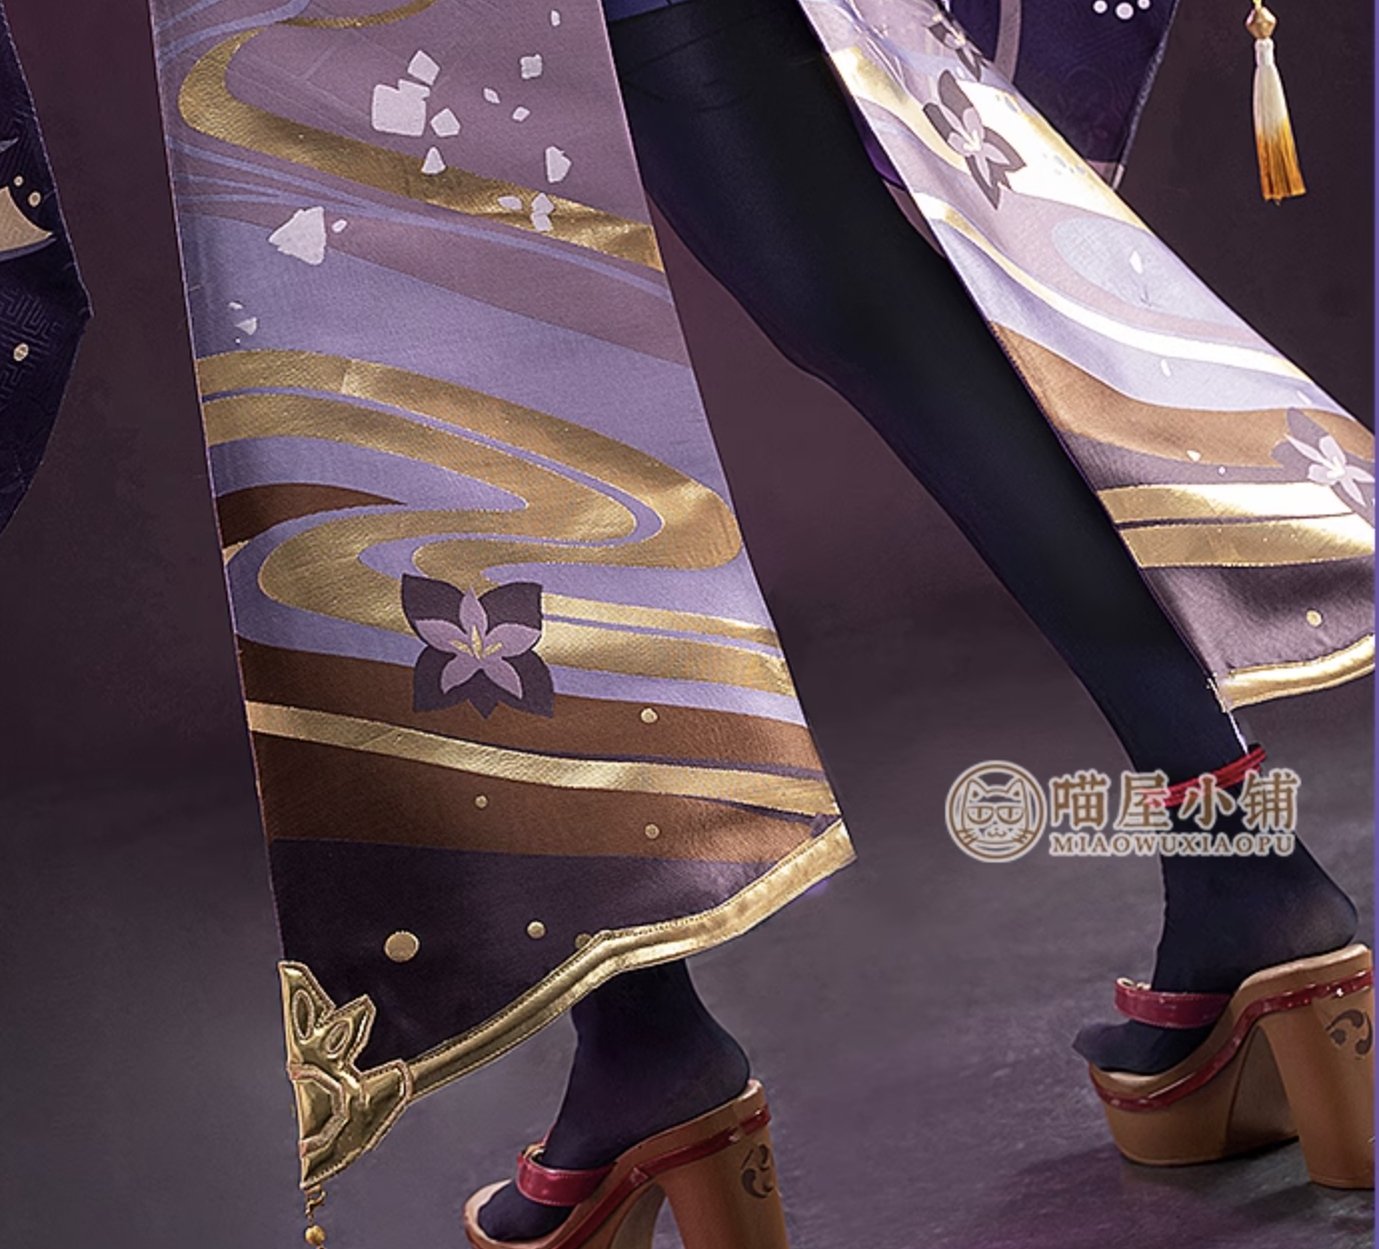 Genshin Impact Raiden Shogun Cosplay Costume Suit 15452:453981